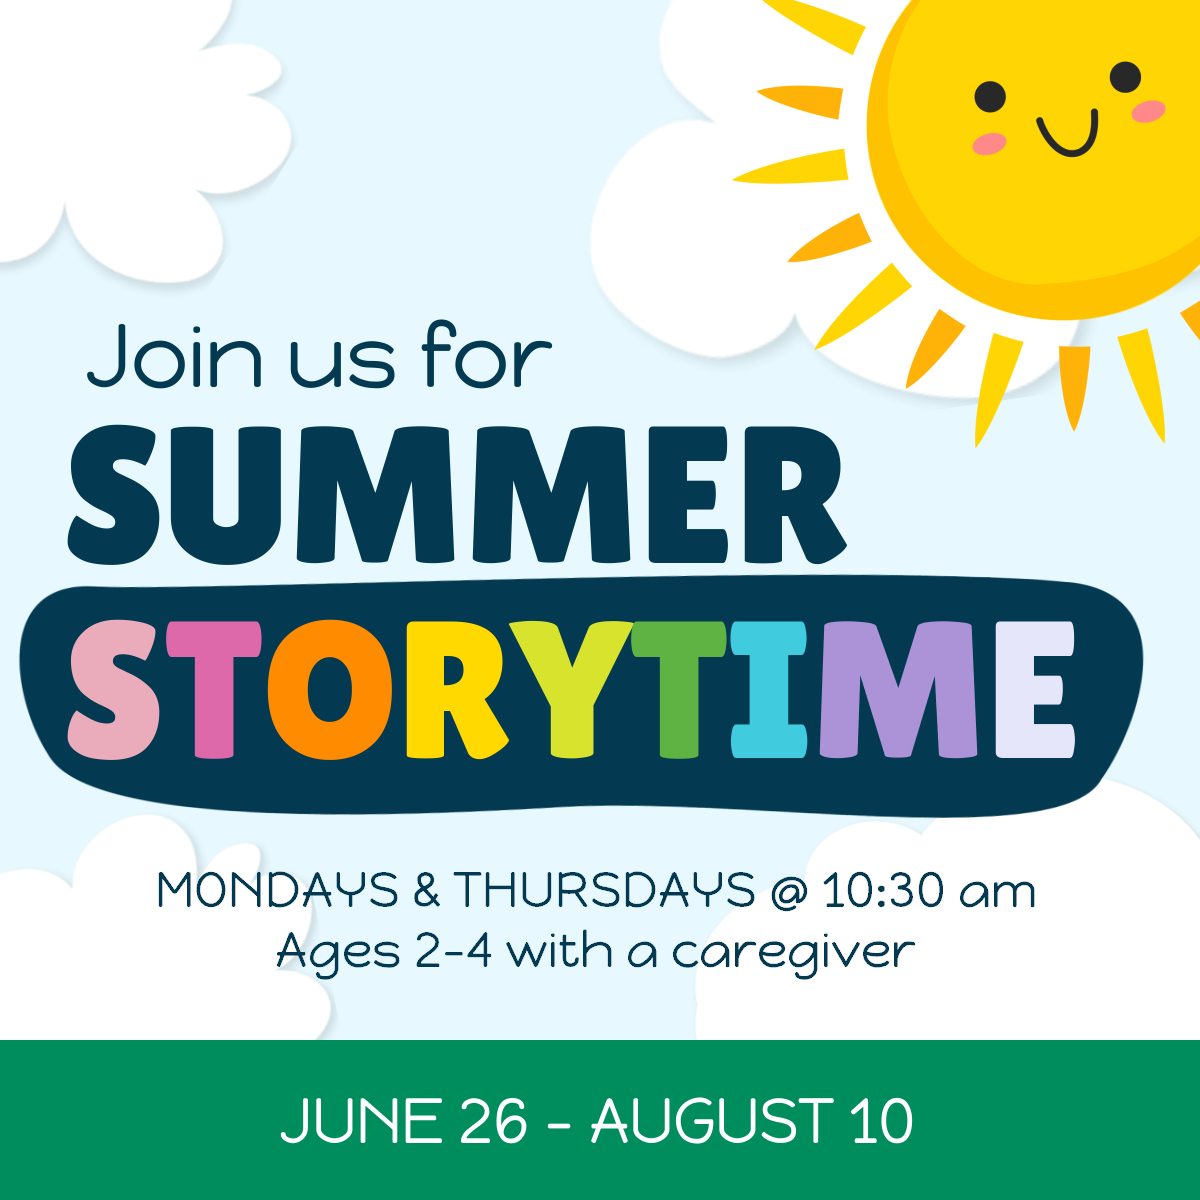 Summer Storytime Mondays and Thursdays 10:30am June 26-August 10